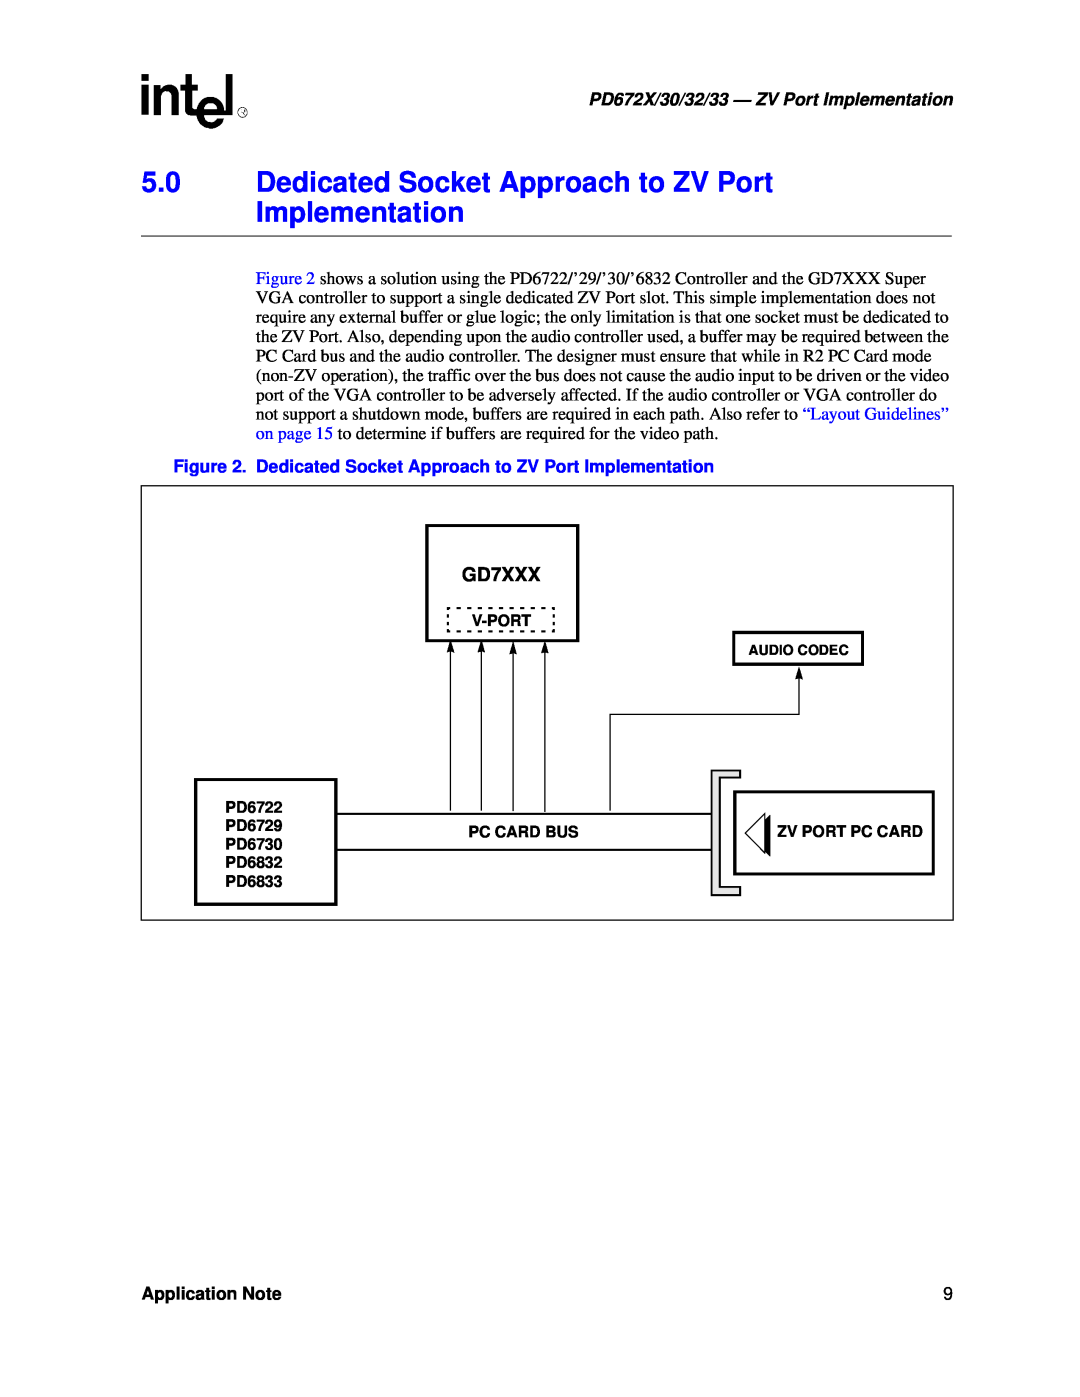 Intel manual GD7XXX, PD672X/30/32/33 - ZV Port Implementation, Application Note 